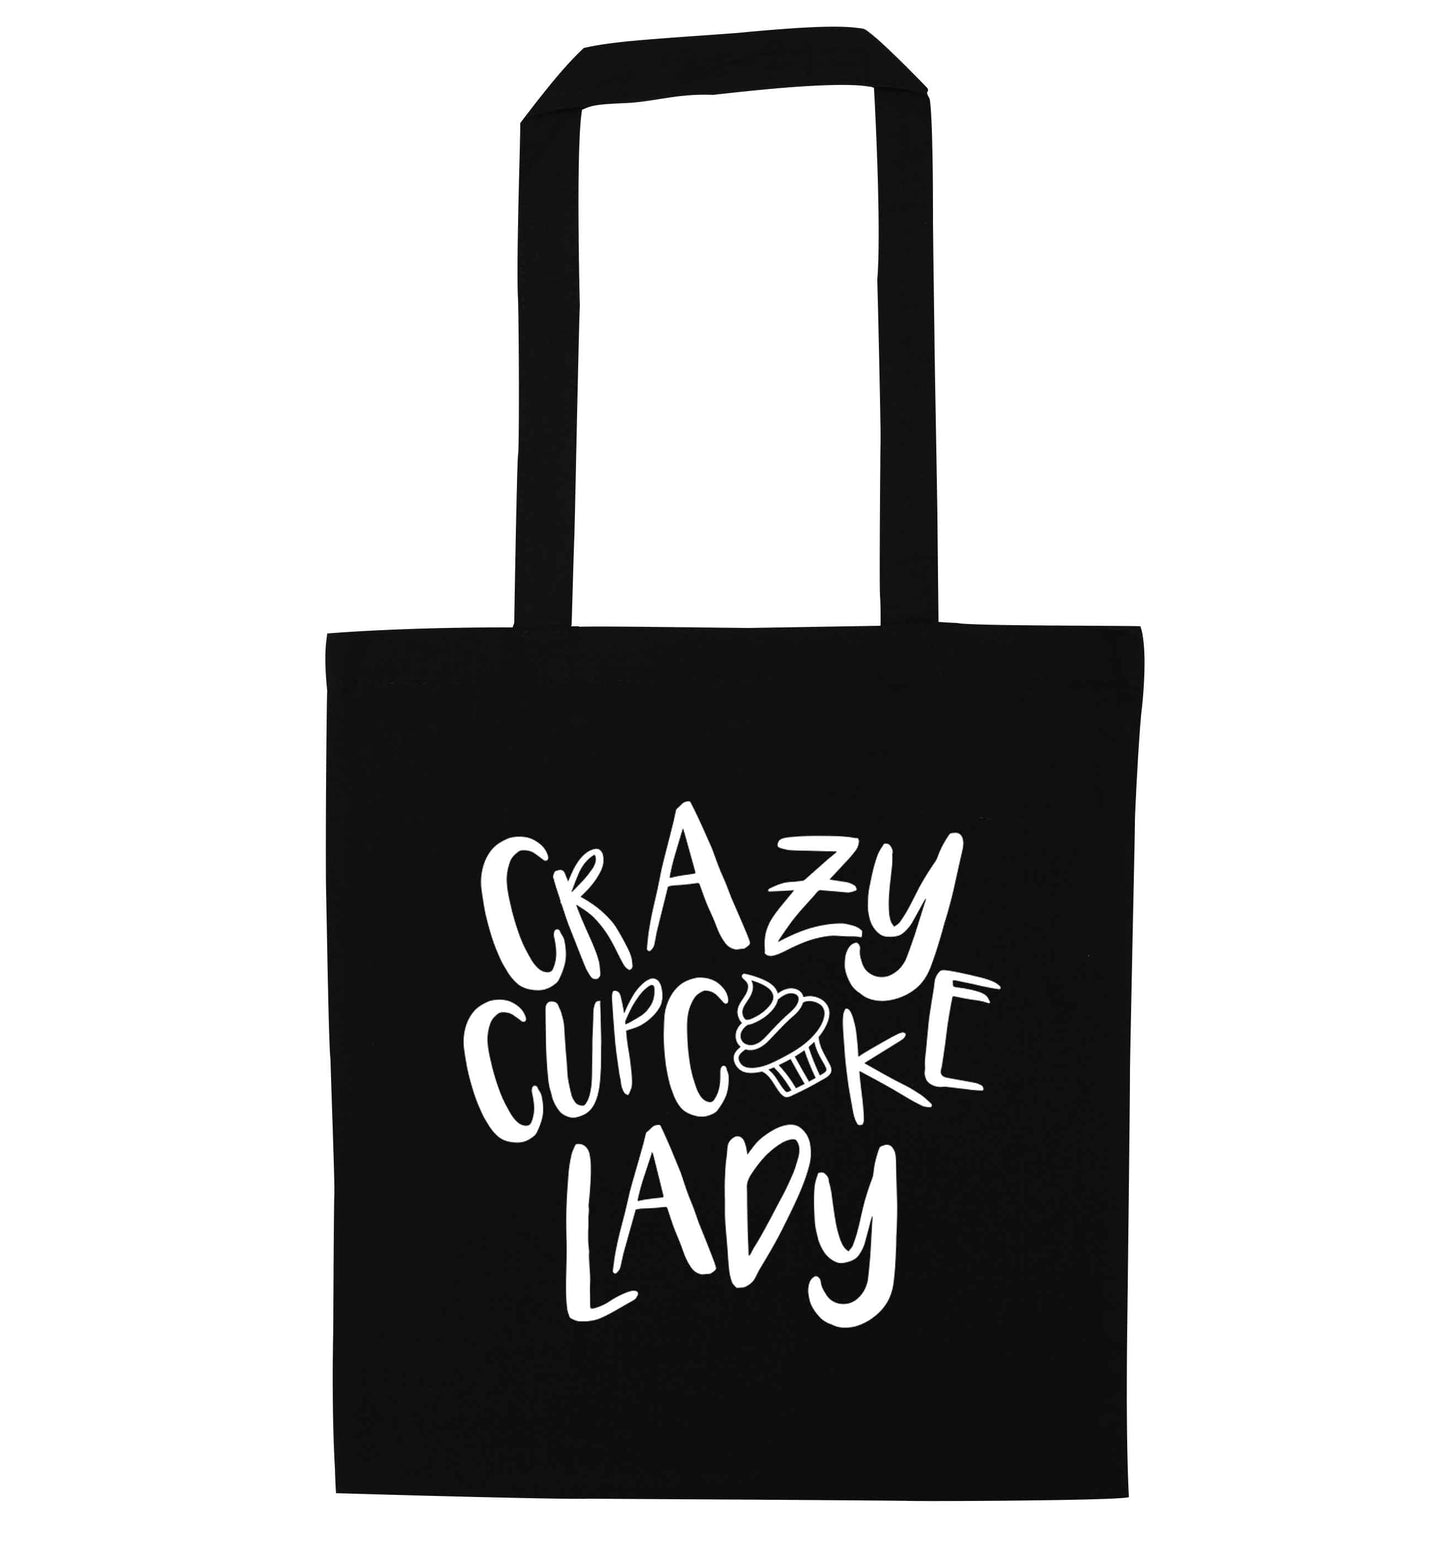 Crazy cupcake lady black tote bag